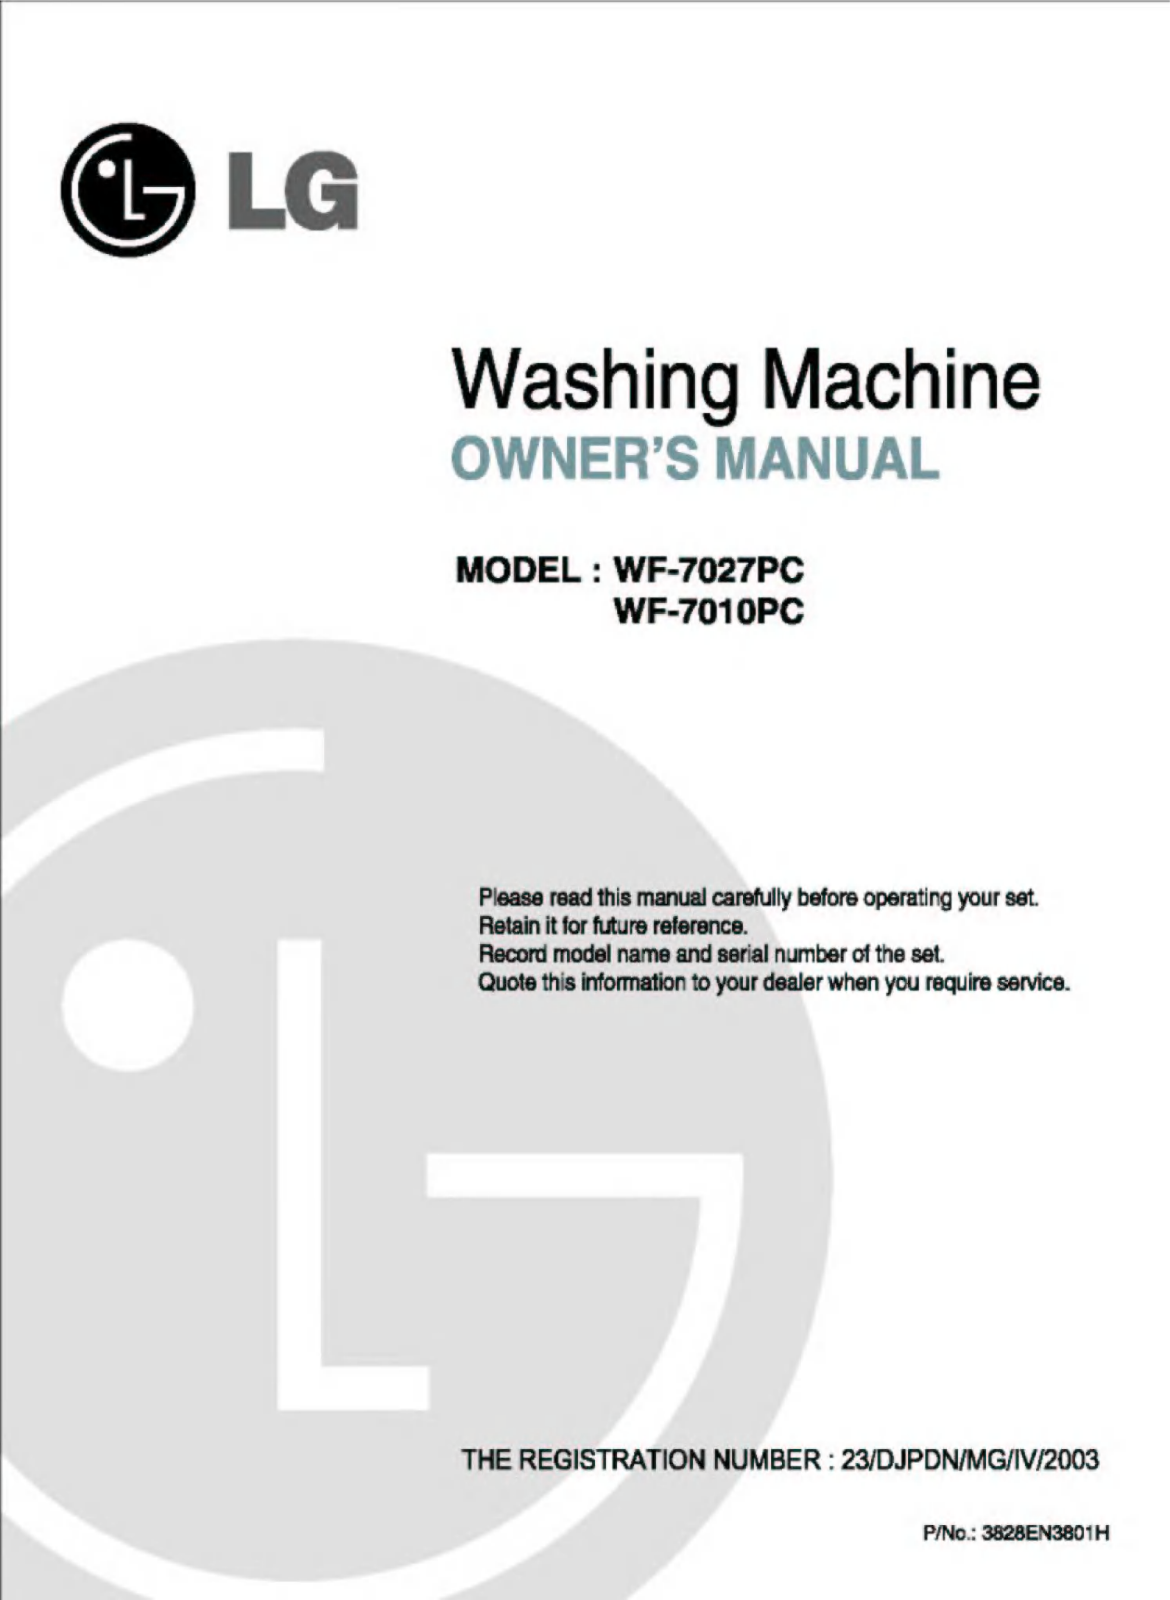 LG WF-F5700PCP Manual book